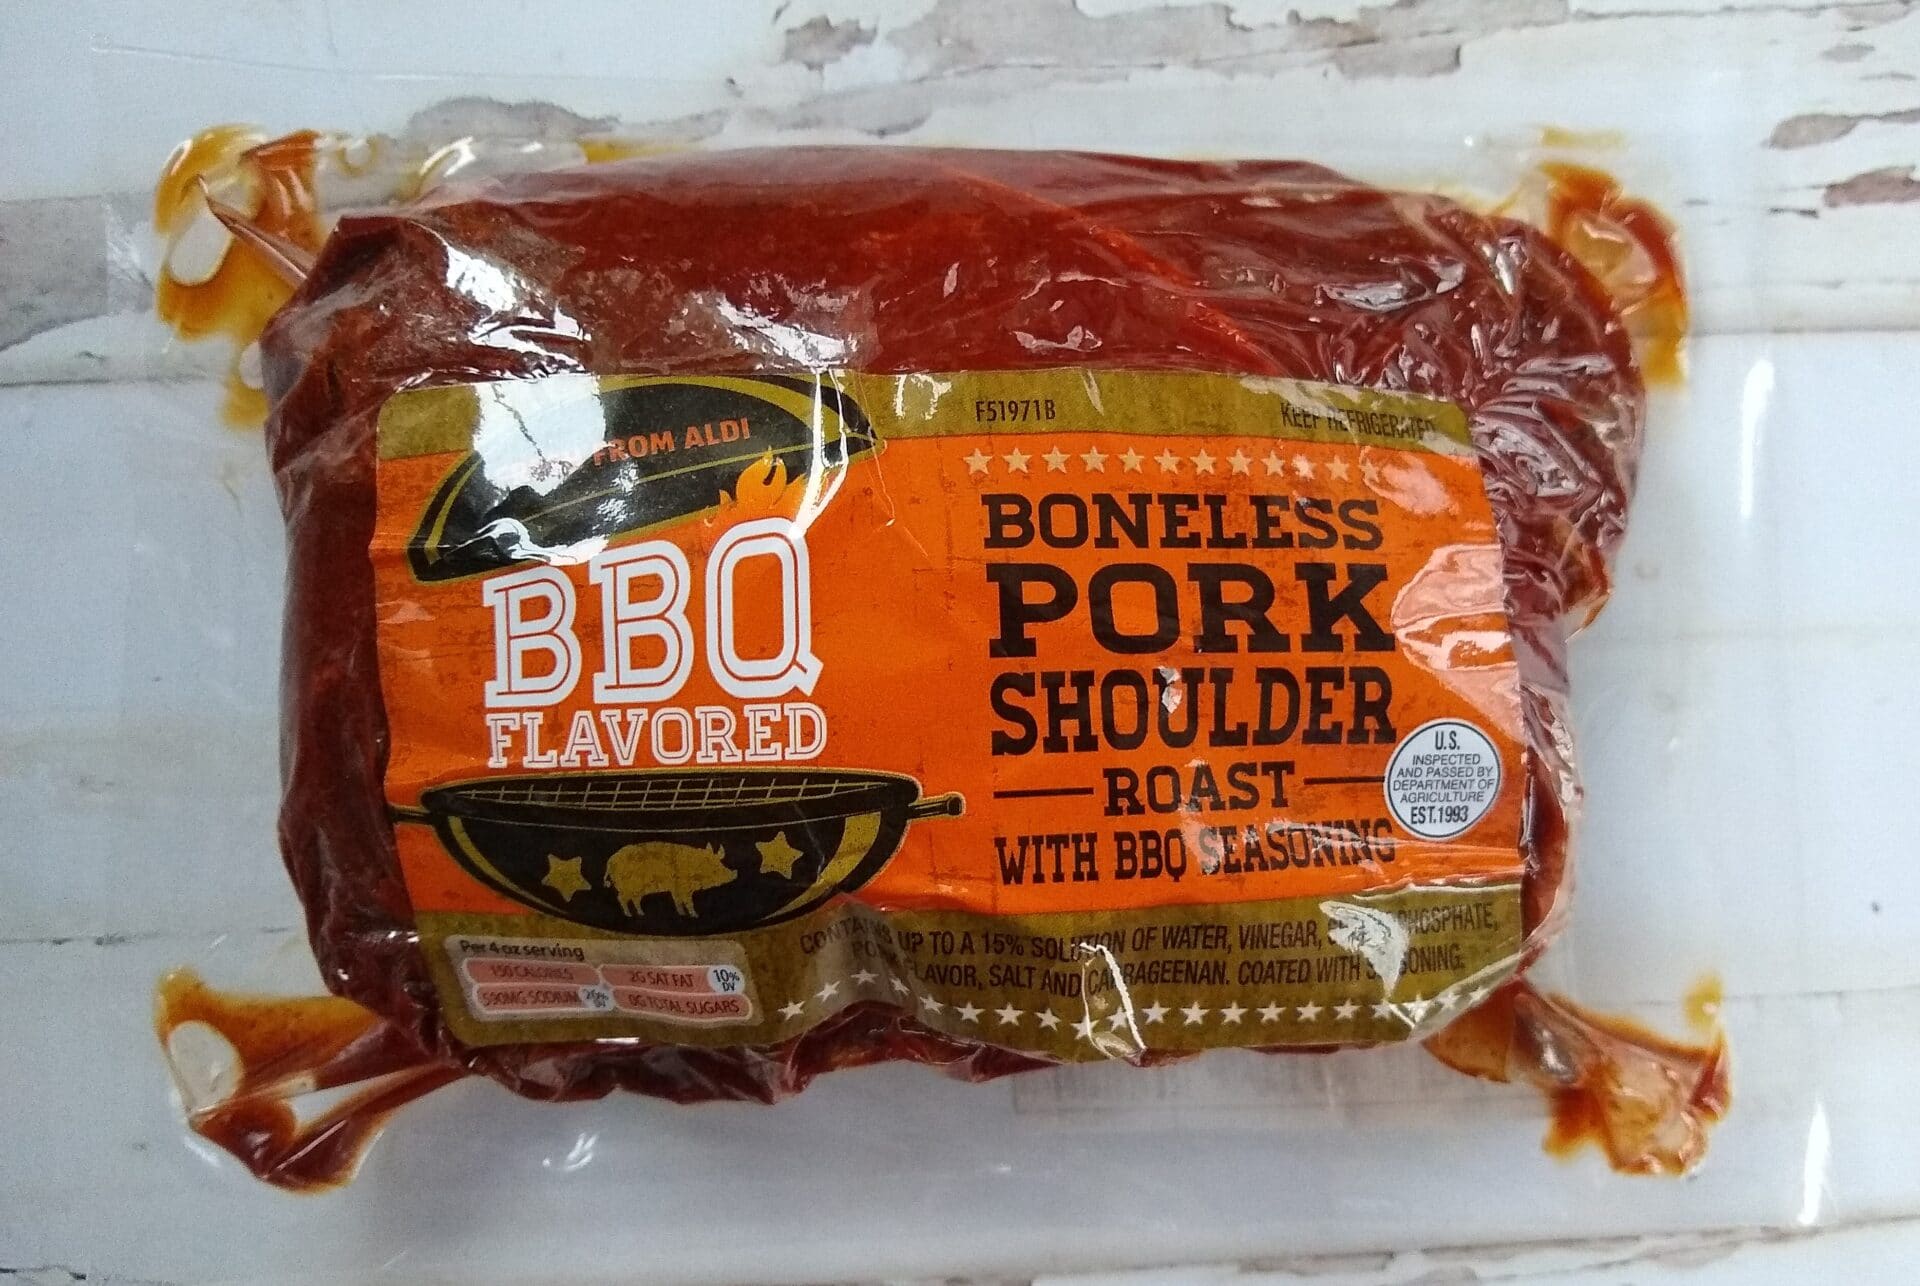 Aldi BBQ Flavored Boneless Pork Shoulder Roast with BBQ Seasoning